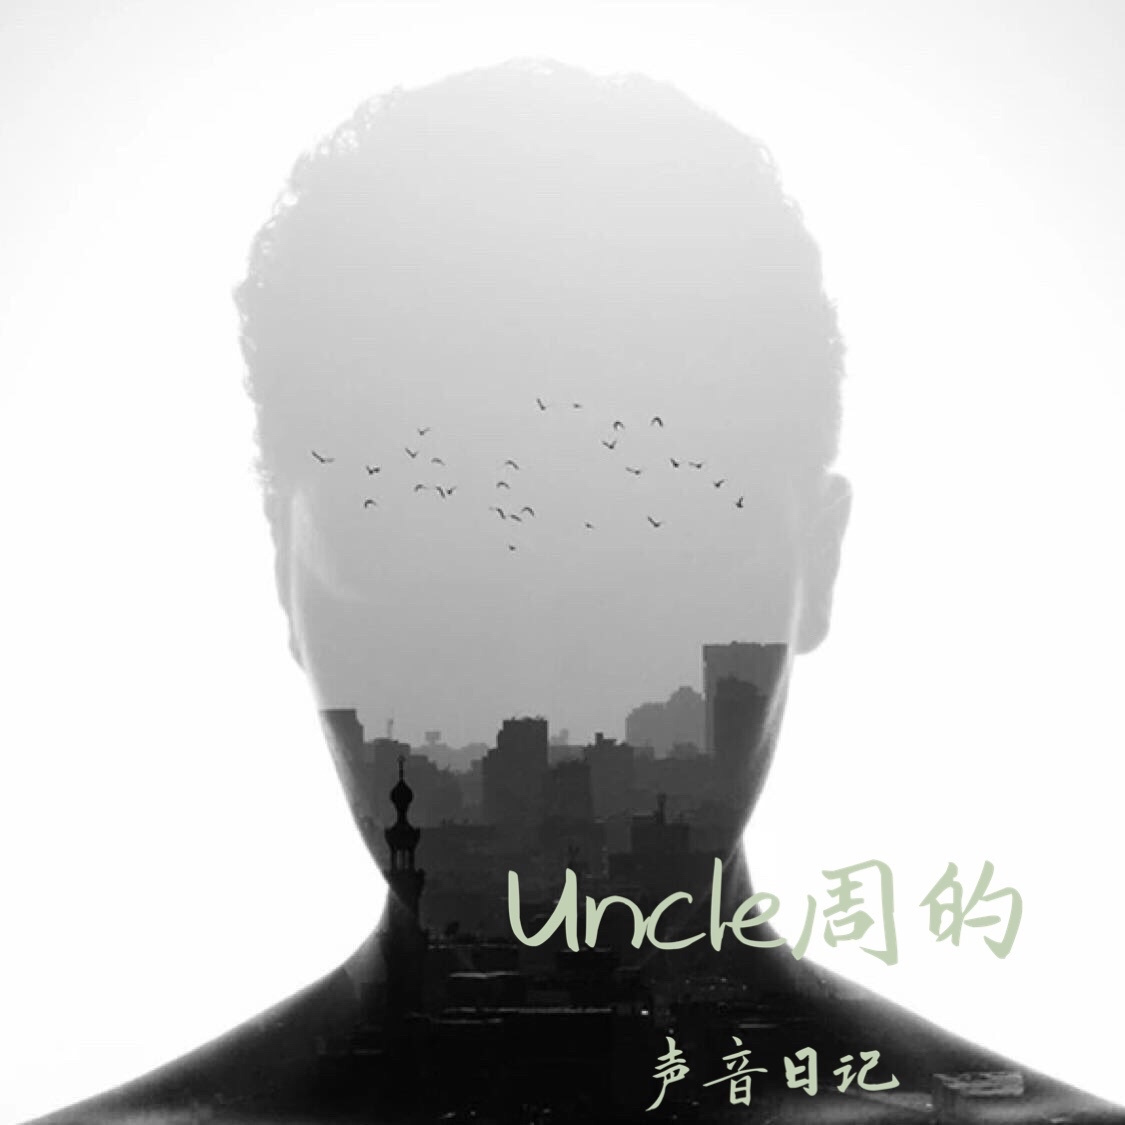 Uncle_周